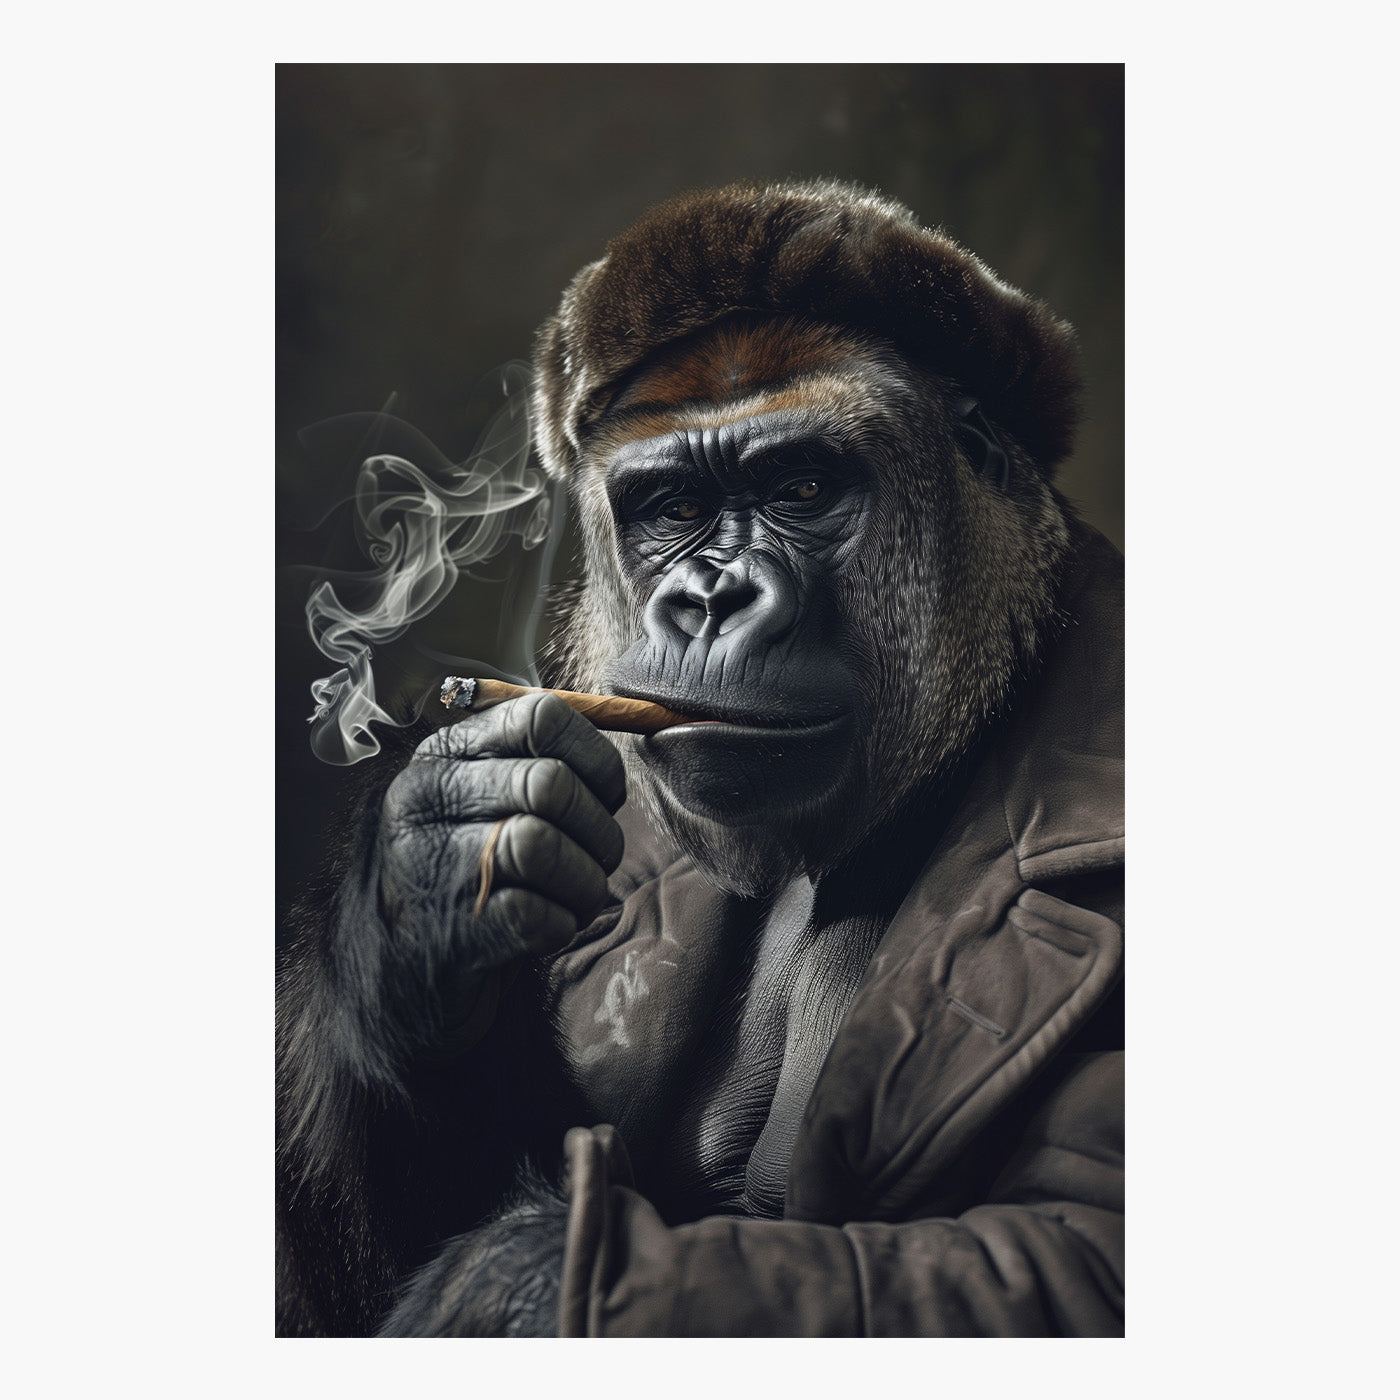 Cuban Gorilla